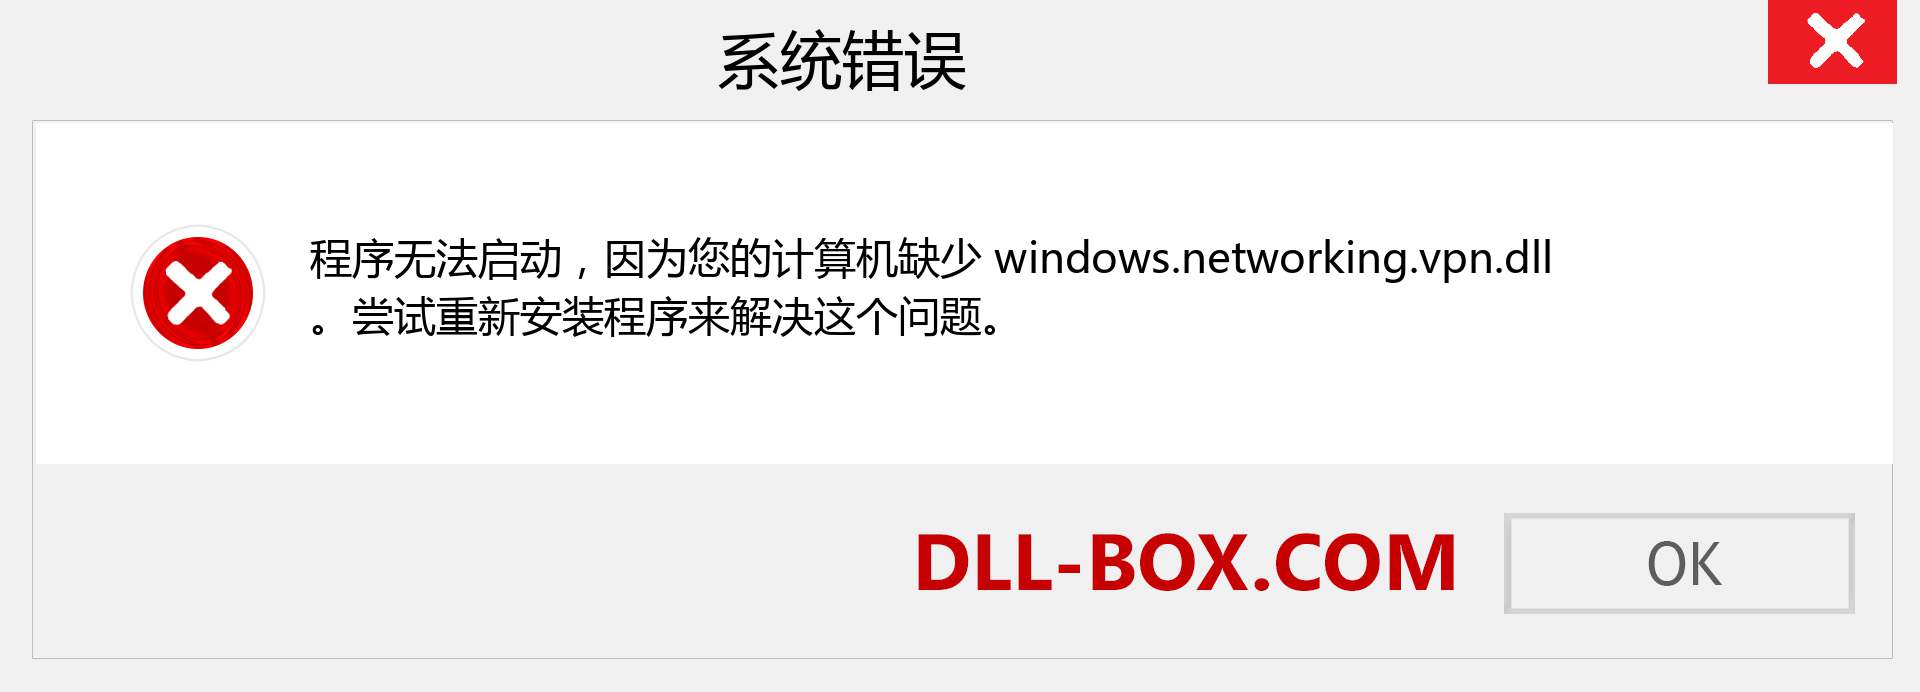 windows.networking.vpn.dll 文件丢失？。 适用于 Windows 7、8、10 的下载 - 修复 Windows、照片、图像上的 windows.networking.vpn dll 丢失错误